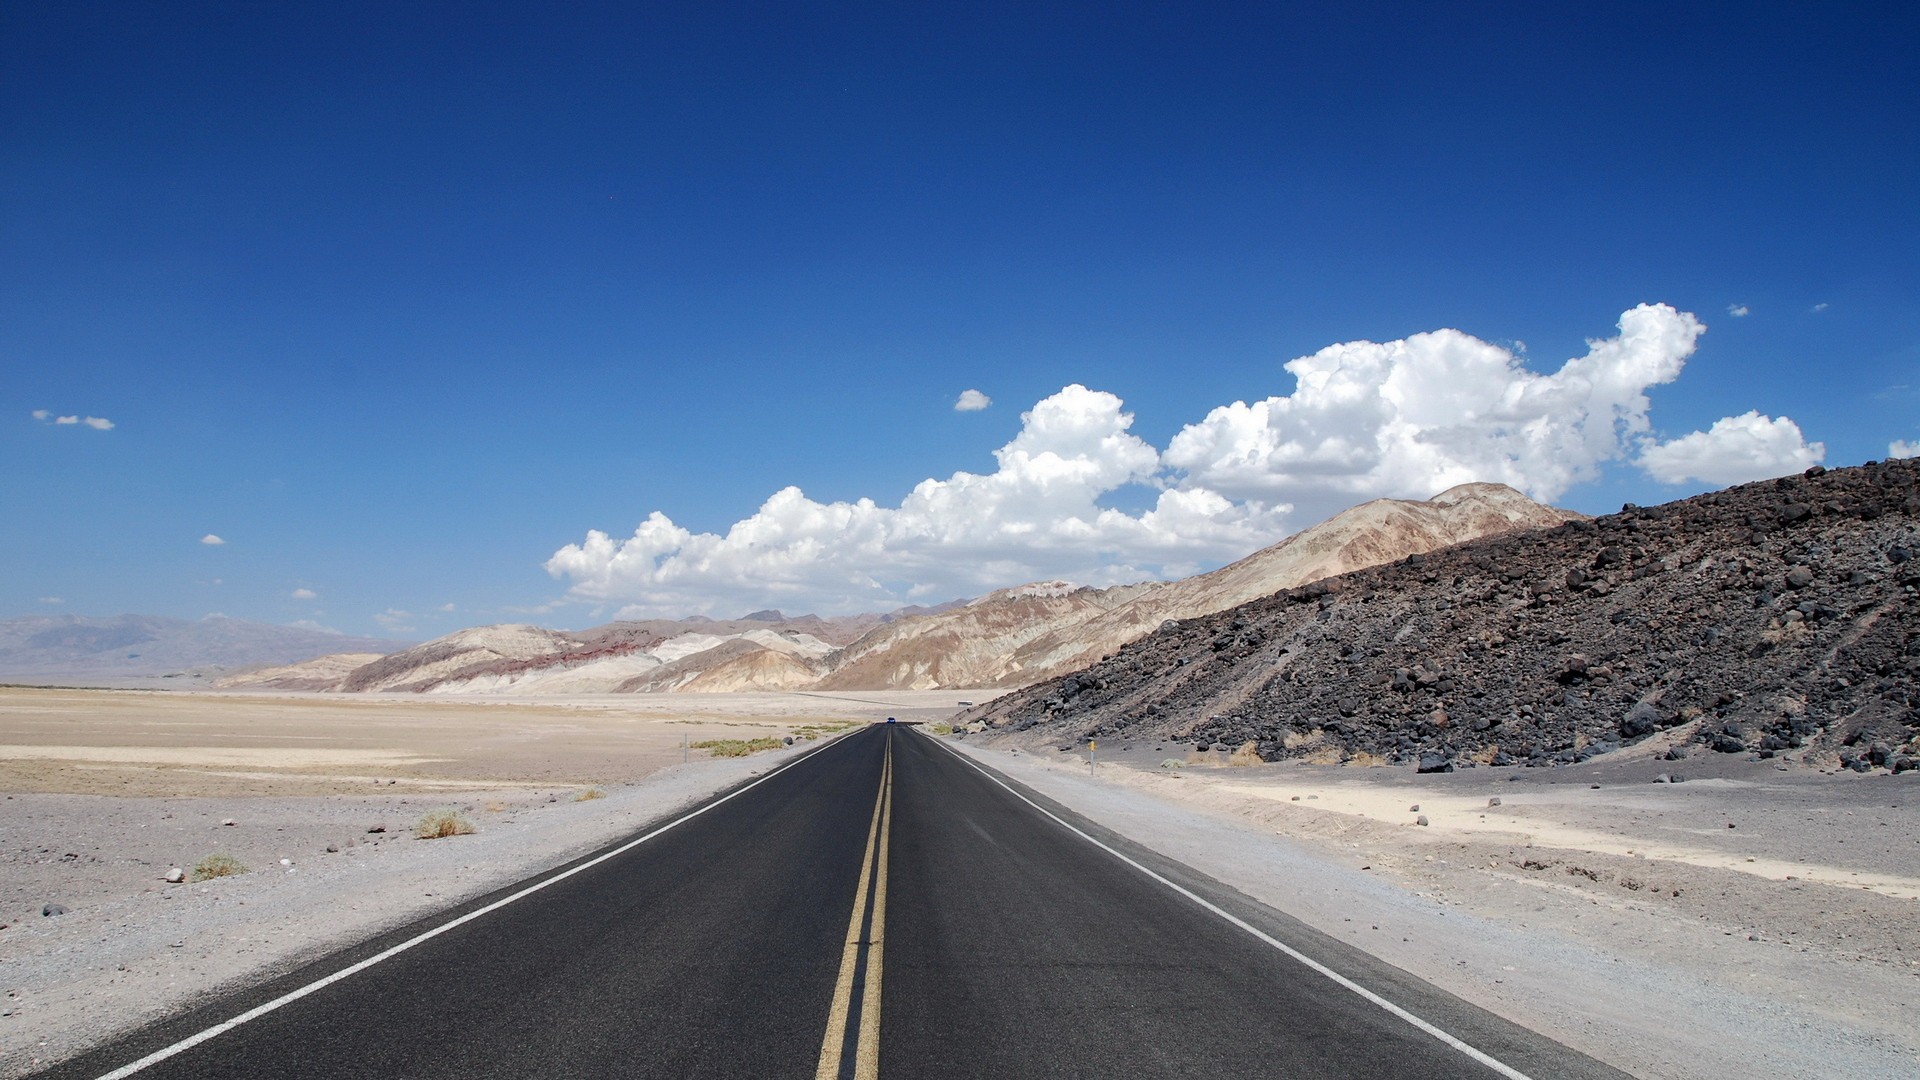 General 1920x1080 landscape road desert mountains Death Valley nature USA long road asphalt